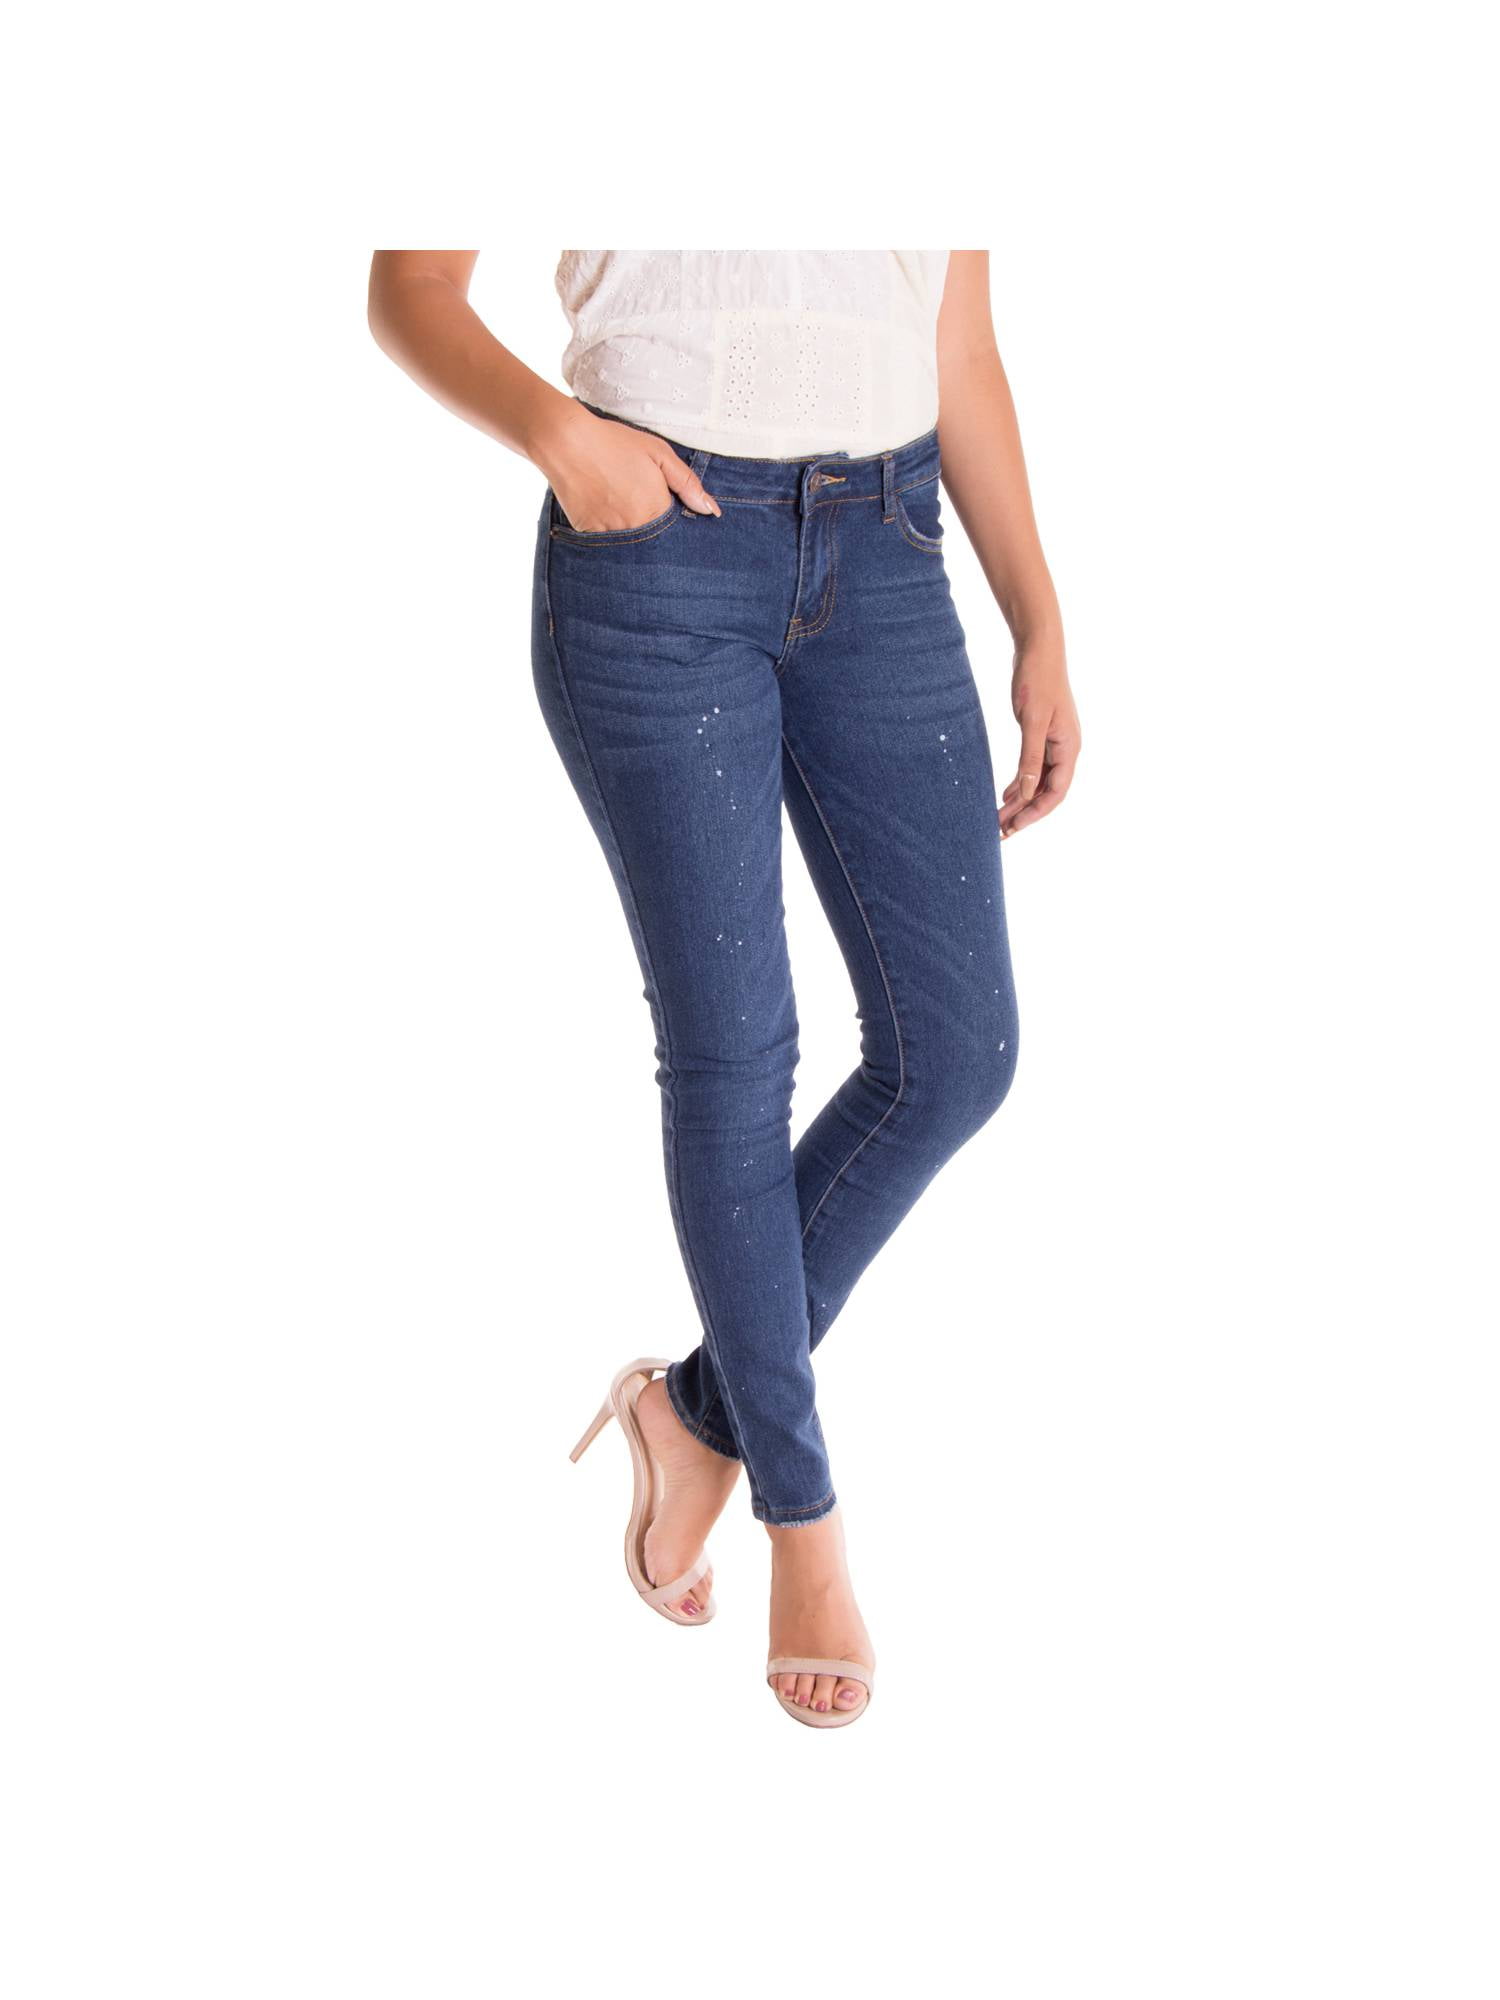 Altatac Womens Skinny Jeans|Skinny Jeans for Teen Girls Jeans for Women|Low Rise Skinny Jeans for Women|Cute Jeans 